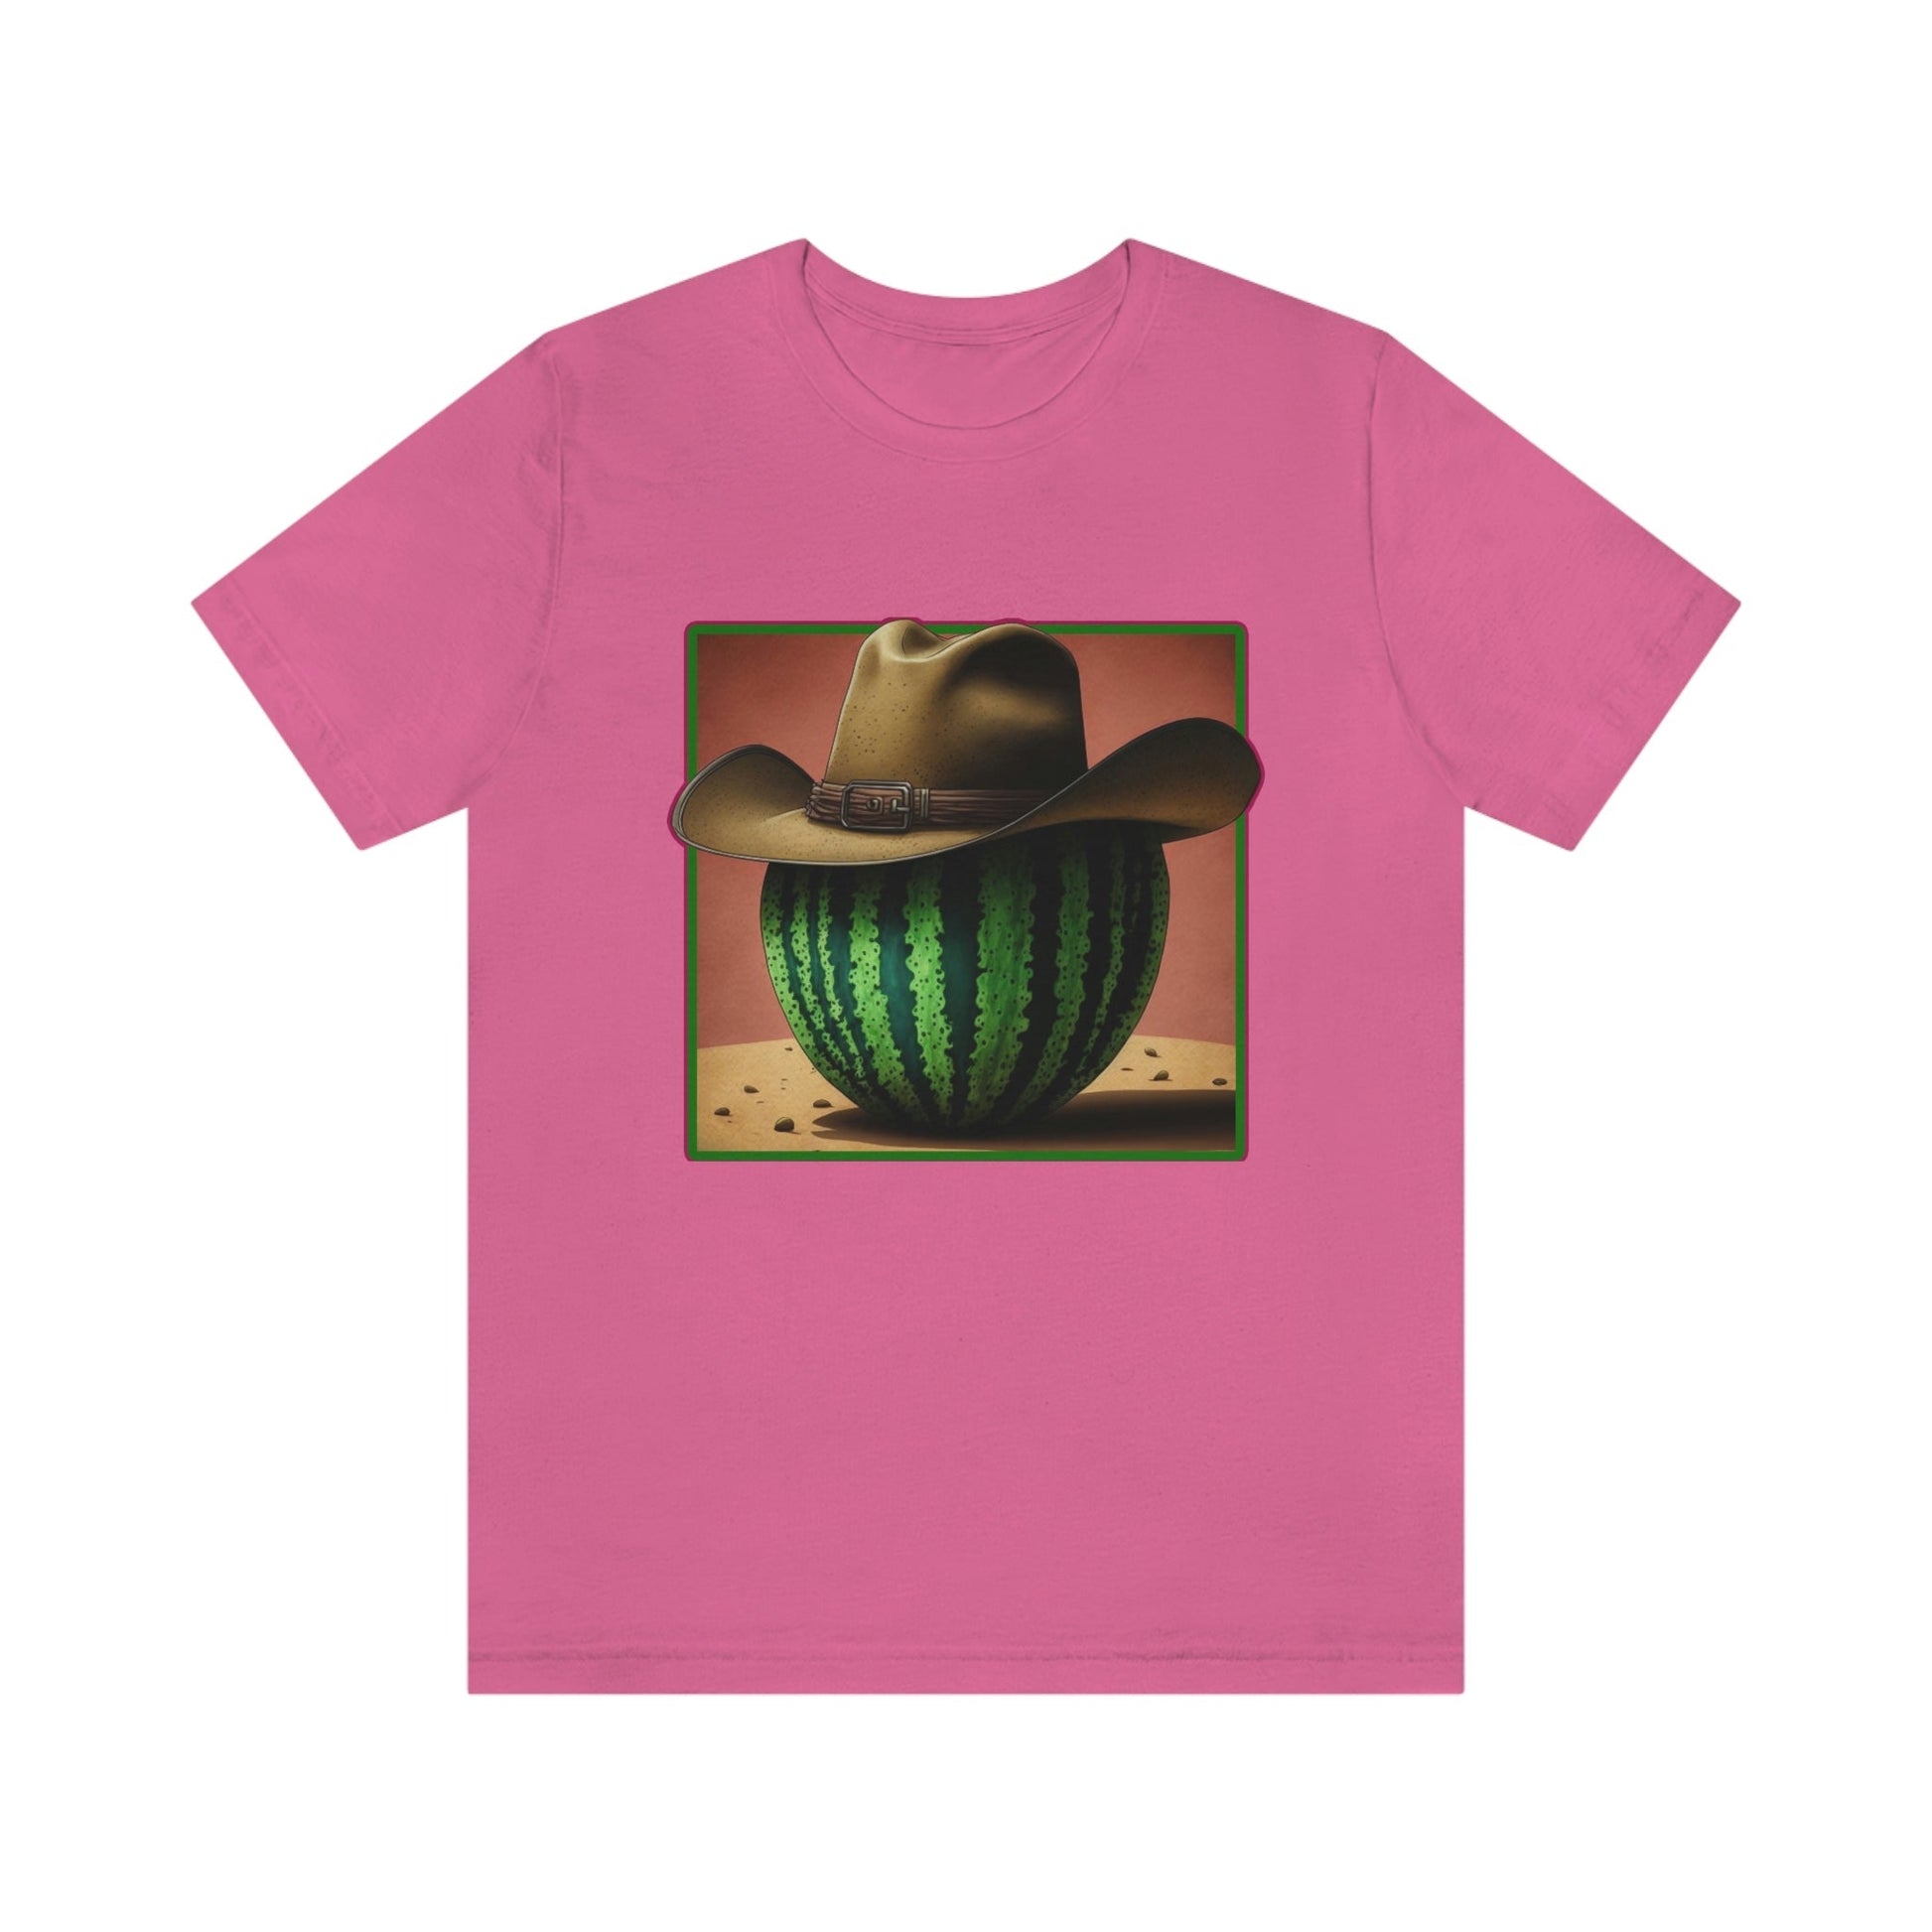 Cowboy Watermelon Tee - The Boss - Bind on Equip - 24111082358612793289